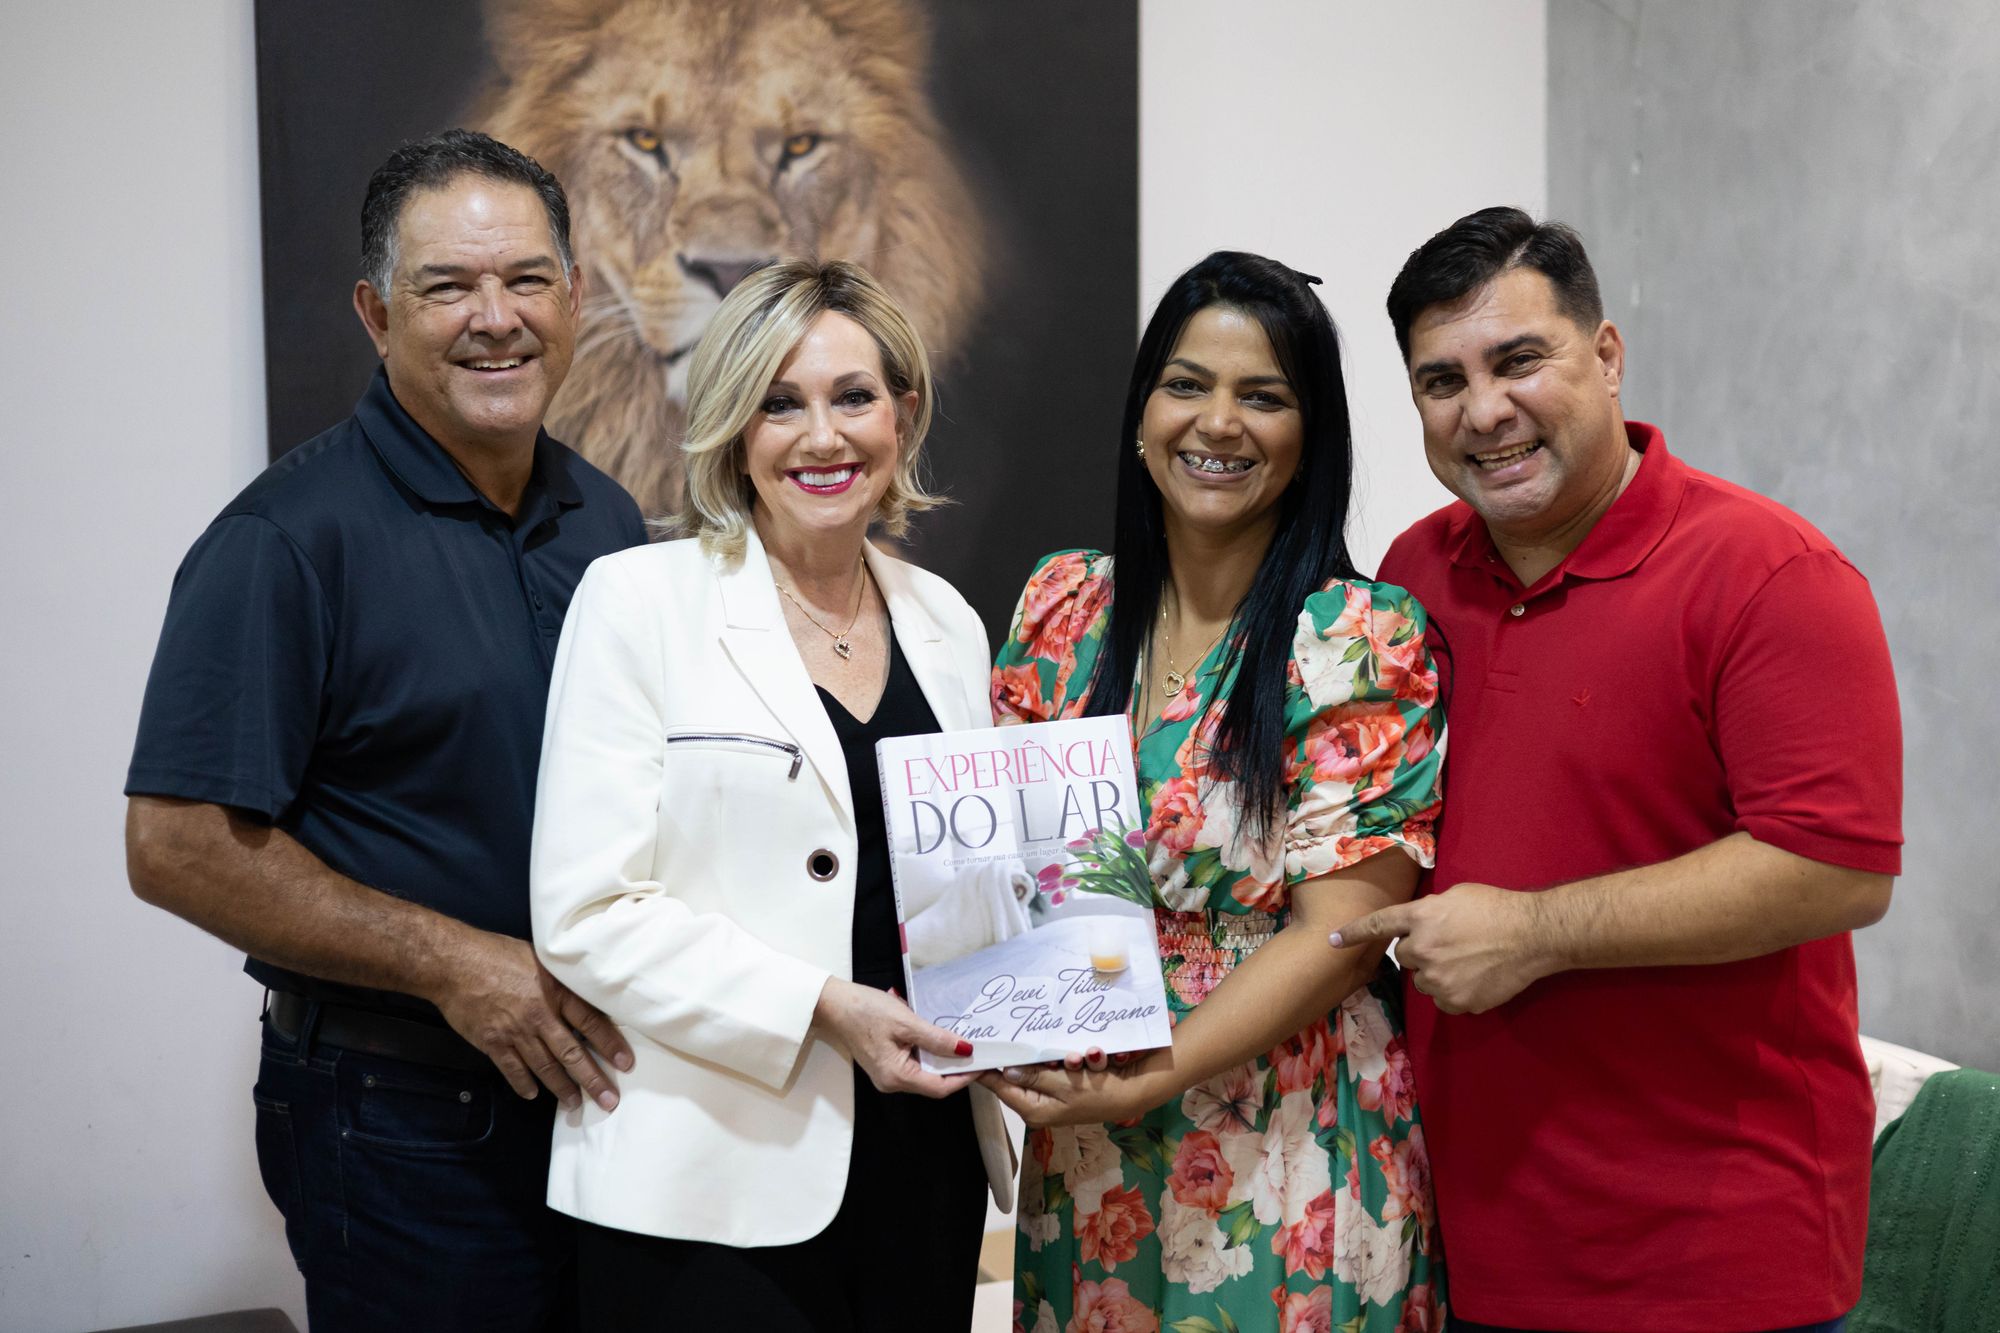 🏡 IBG Taubaté opens doors to Home Experience - SP/Brazil